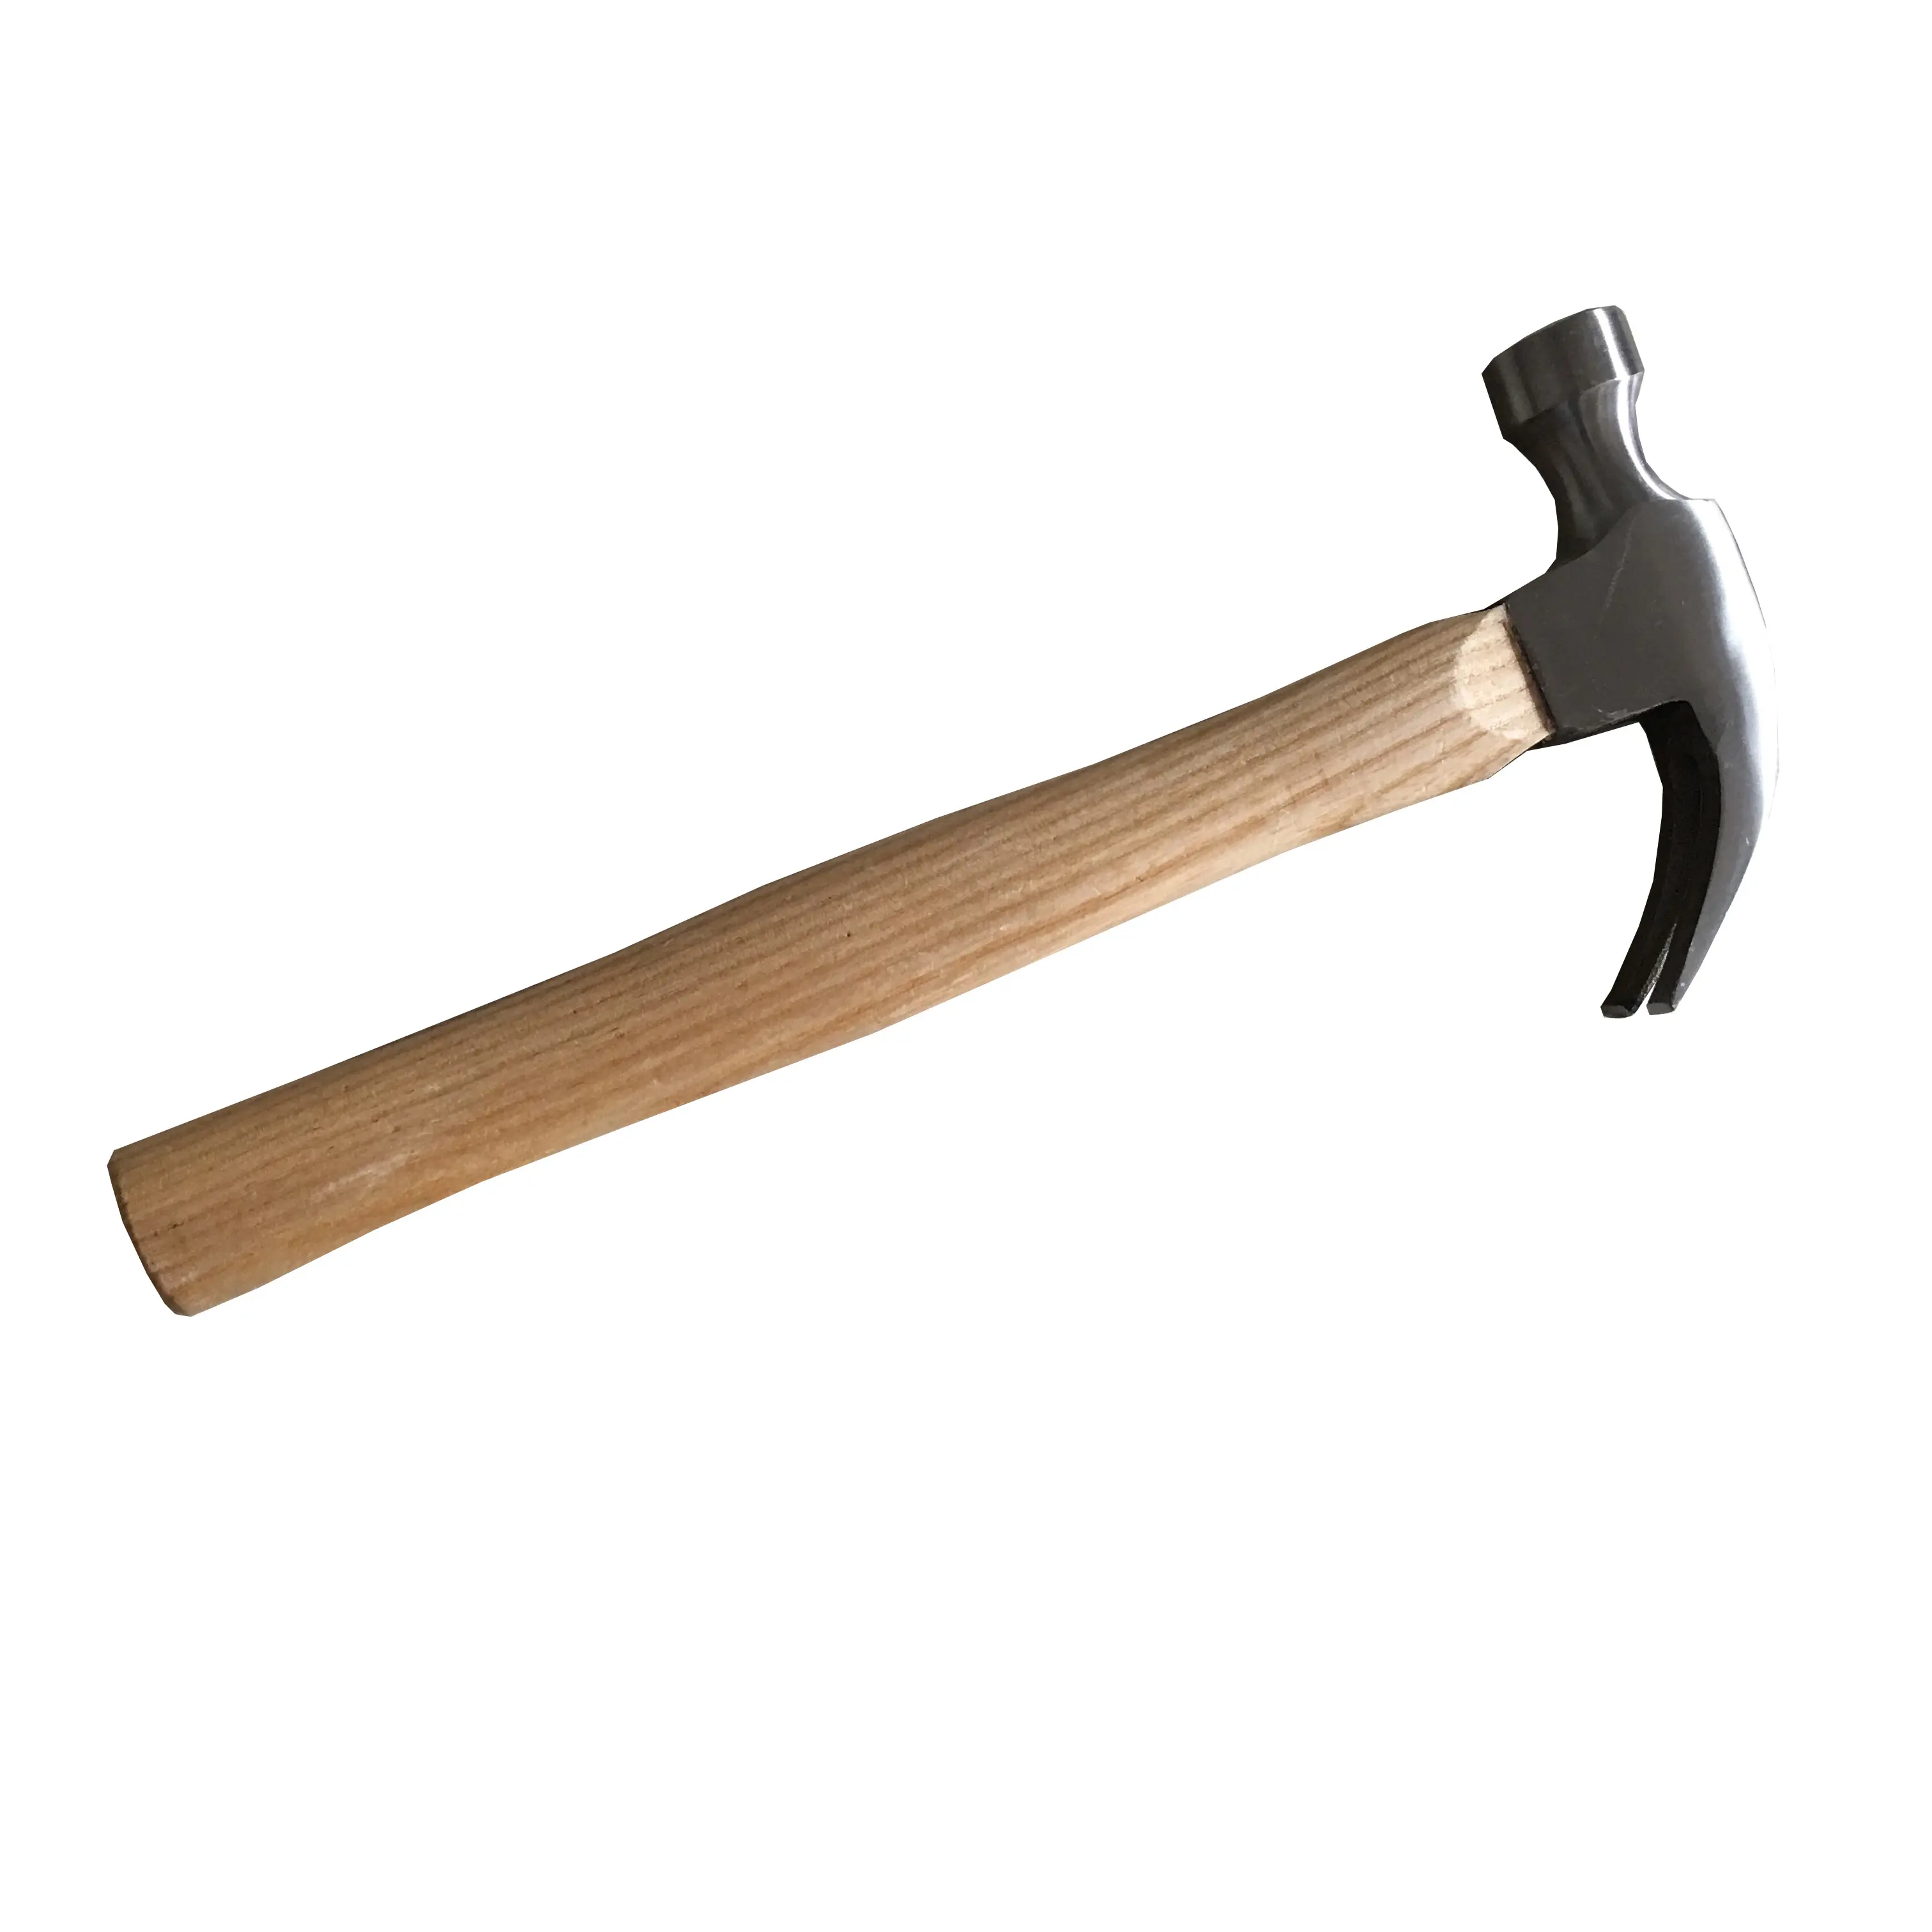 America type 8oz 12oz 16oz 20oz 24oz claw hammer with Hickory wood handle